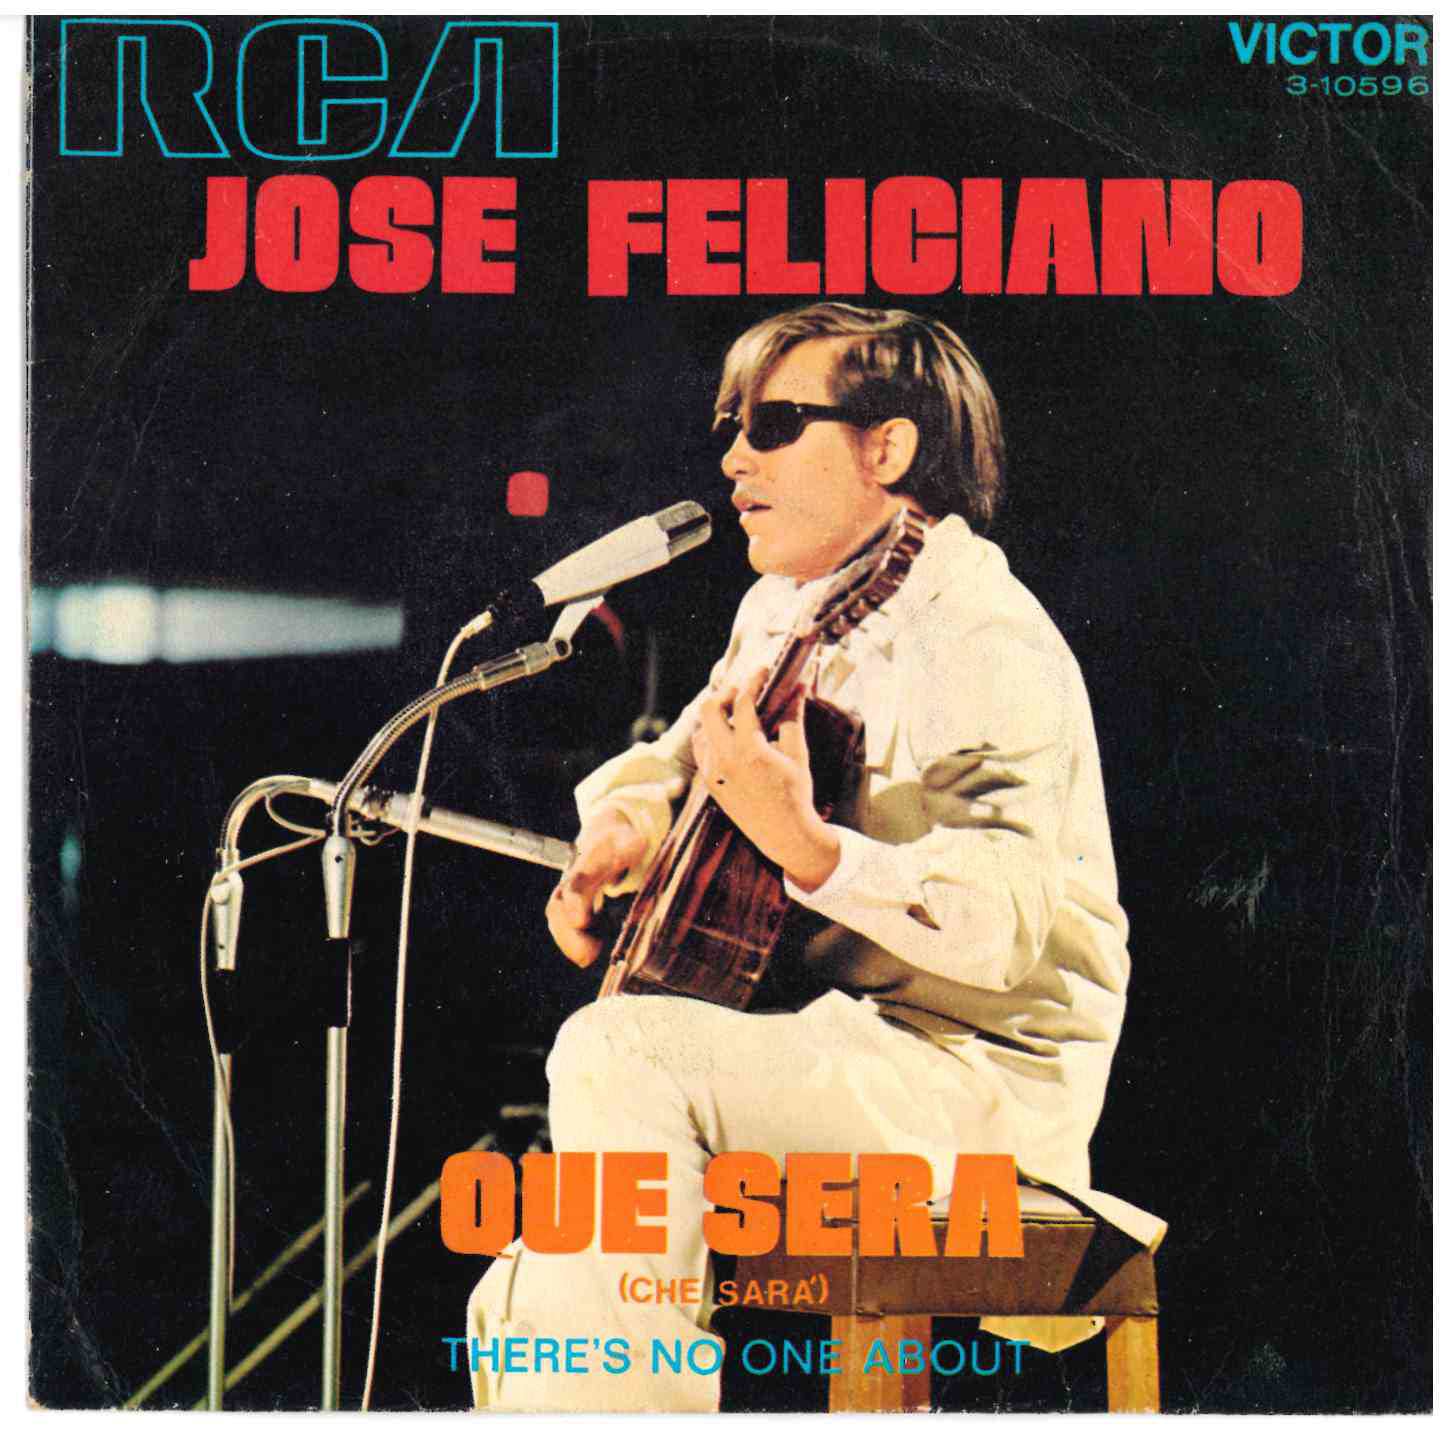 José Feliciano - Que Sara (Che Sara) / There's No One About